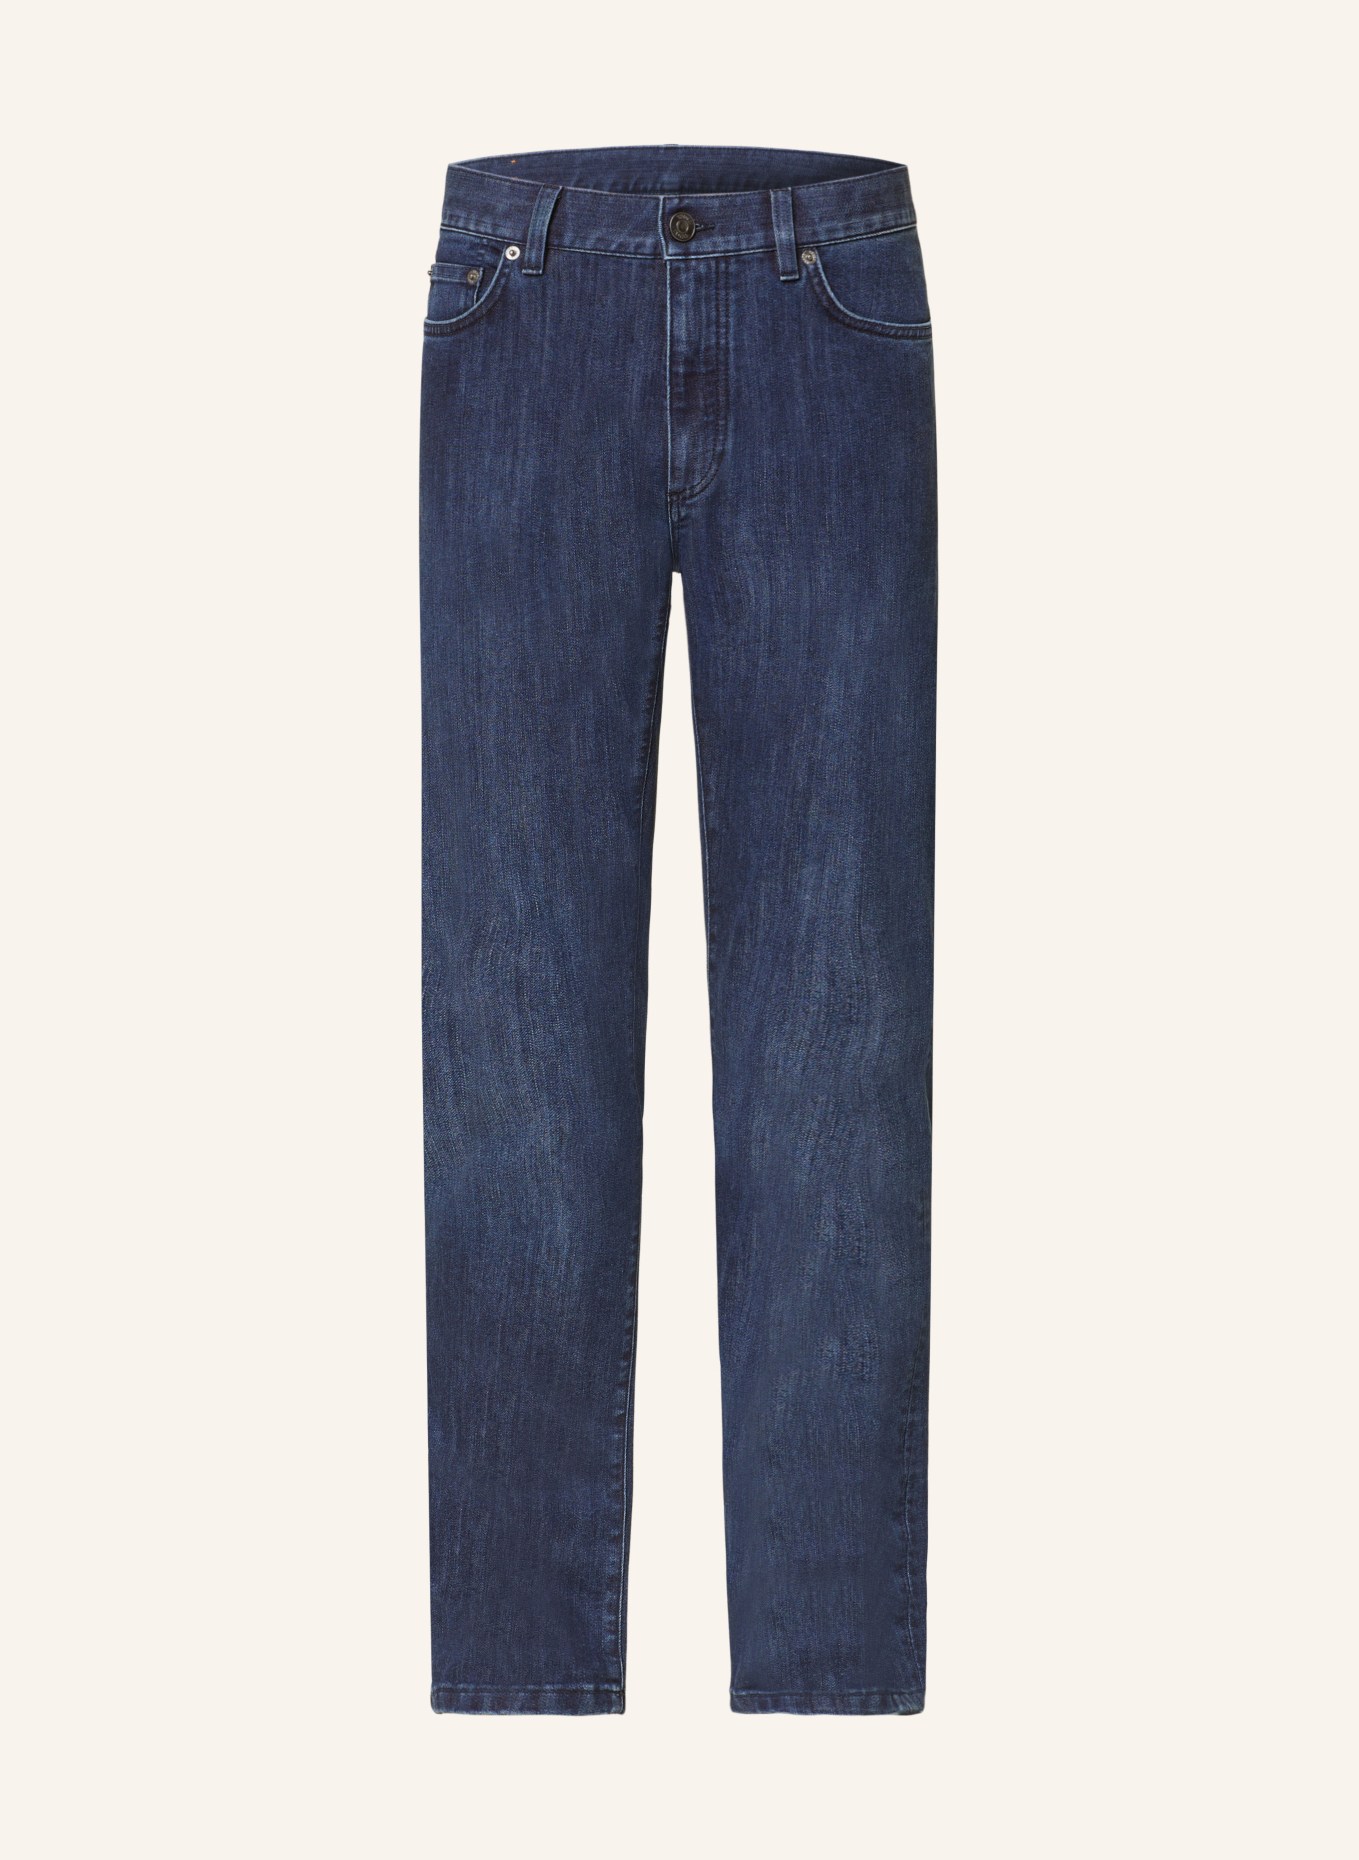 ZEGNA Jeans CITY Extra Slim Fit, Farbe: 001 RINSED (Bild 1)